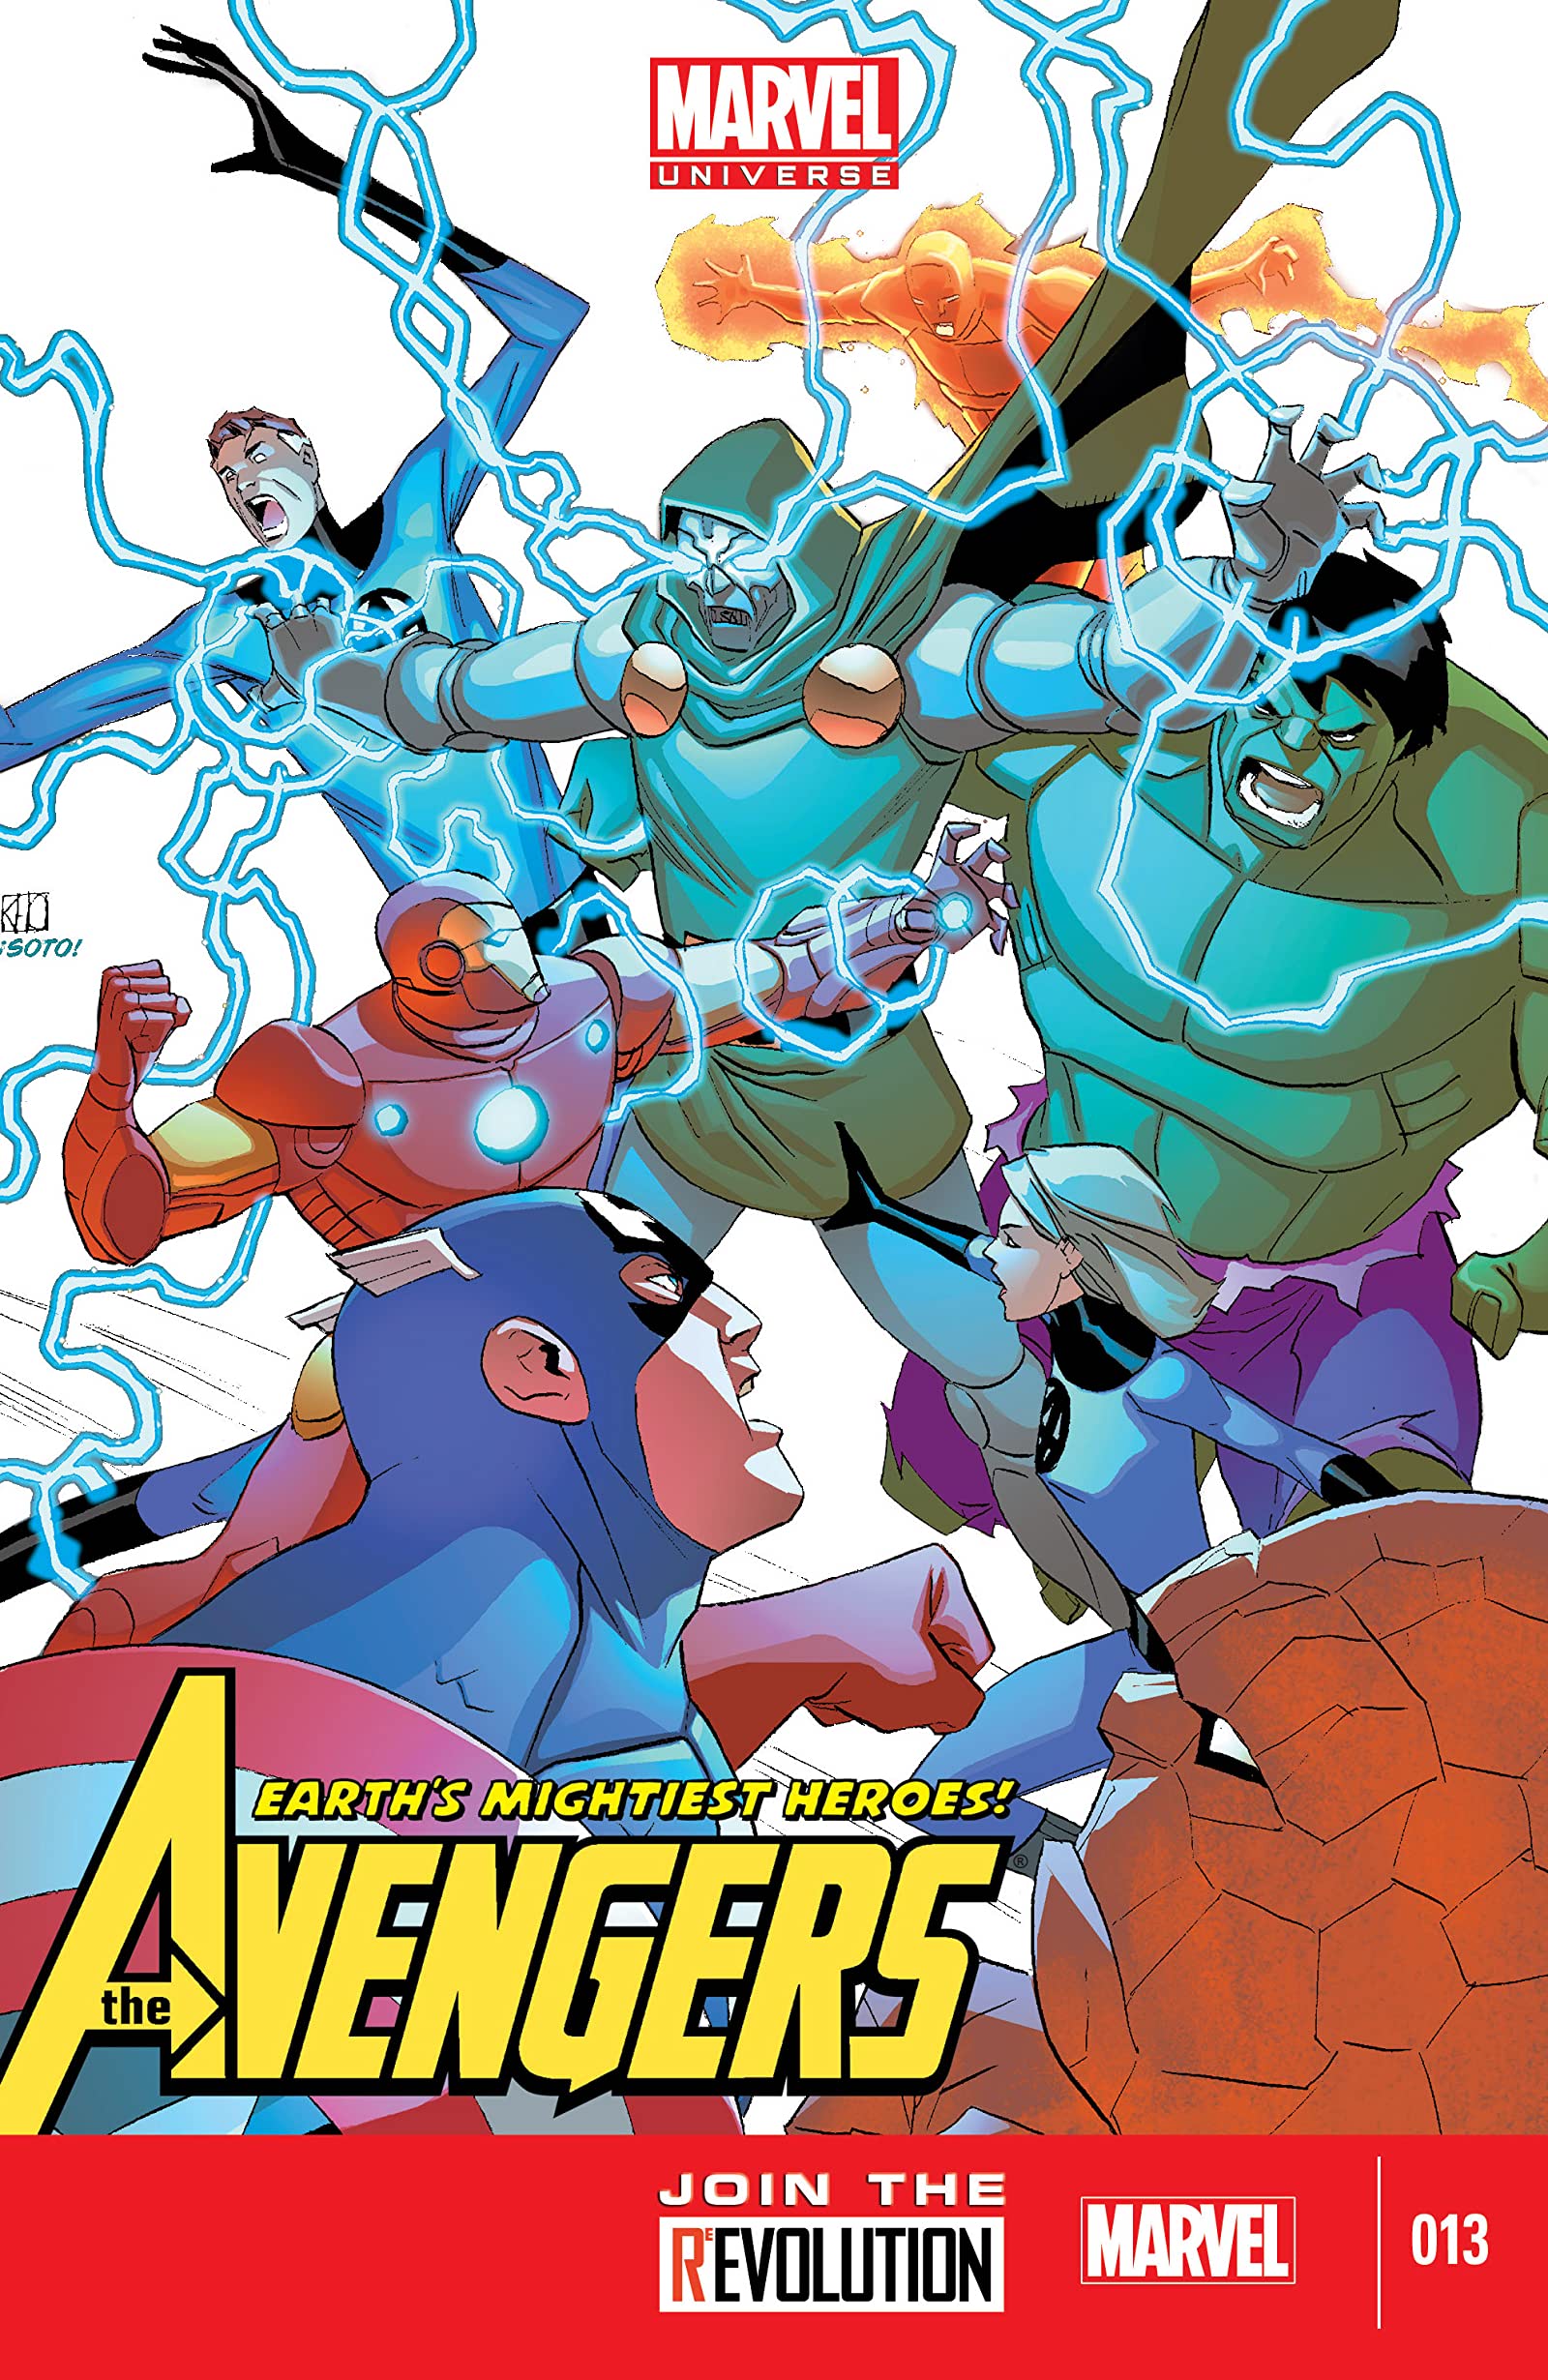 The Avengers: Earth's Mightiest Heroes Art